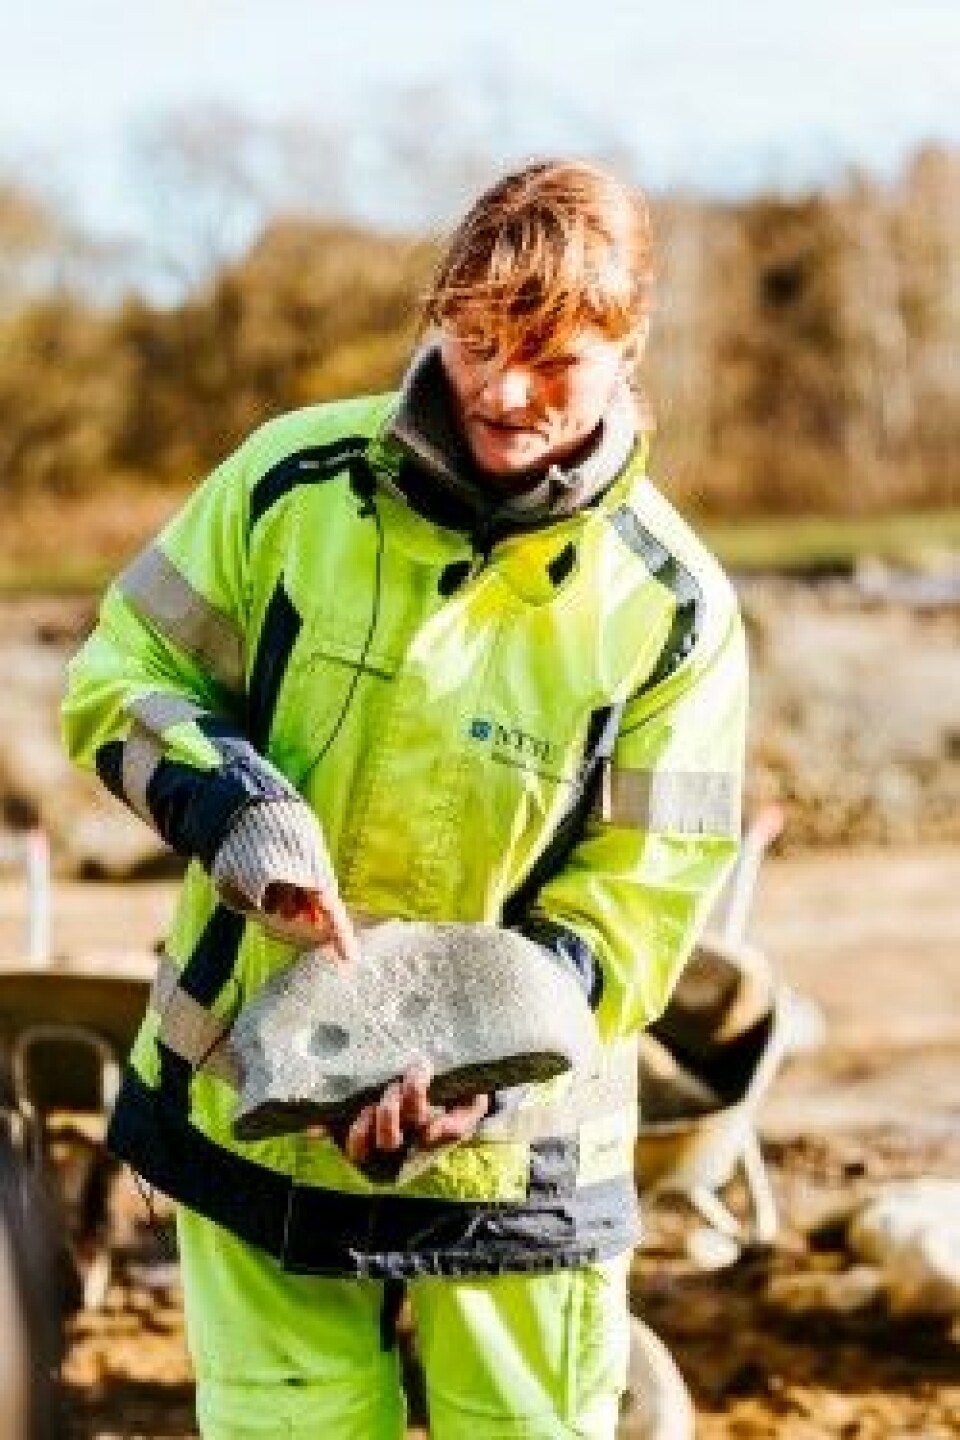 Prosjektleder Merete Moe Henriksen med hella som ble funnet på utgravningsområdet ved Sandbrauta i Lundamo i Melhus kommune. (Foto: Julie Gloppe Solem, NTNU)